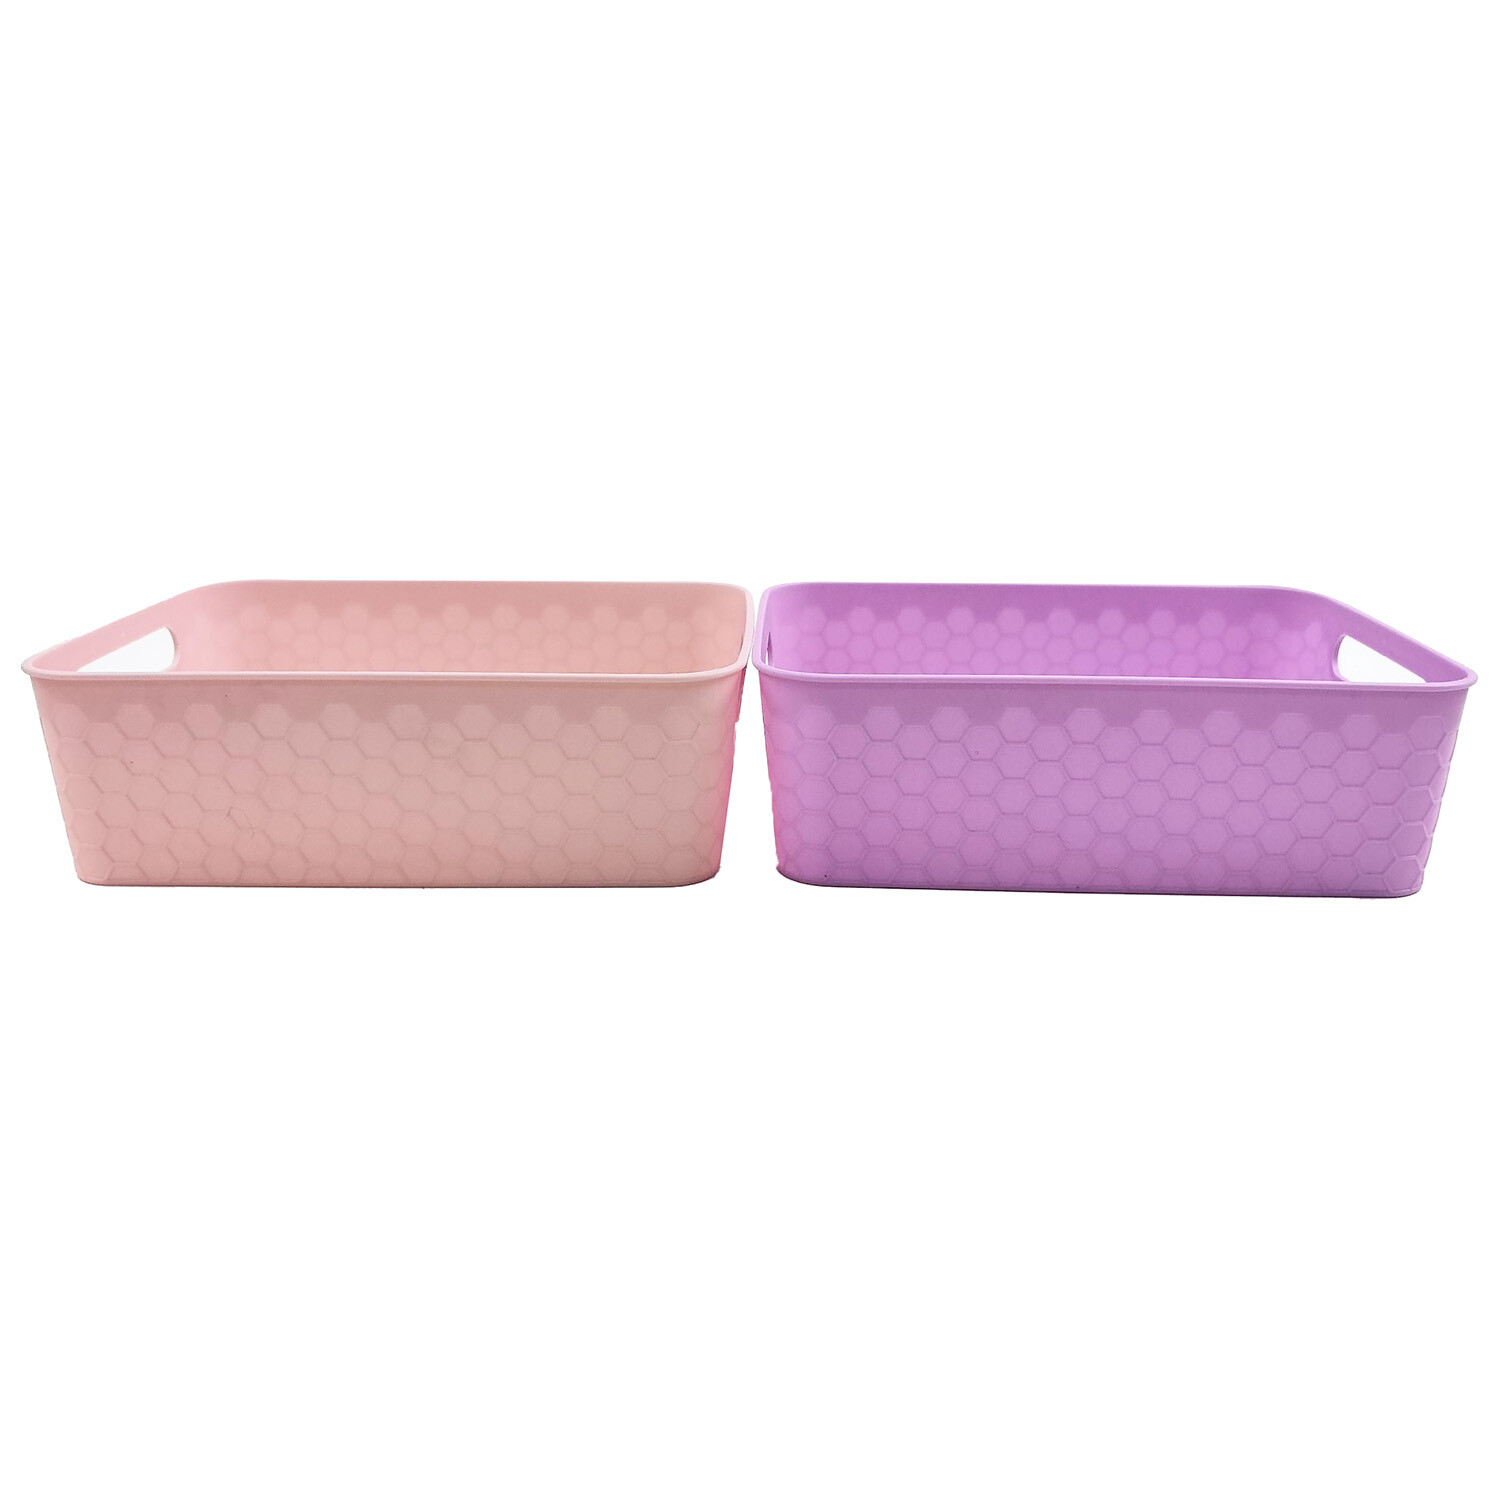 Single Honeycomb Medium Storage Basket in Assorted styles Image 2